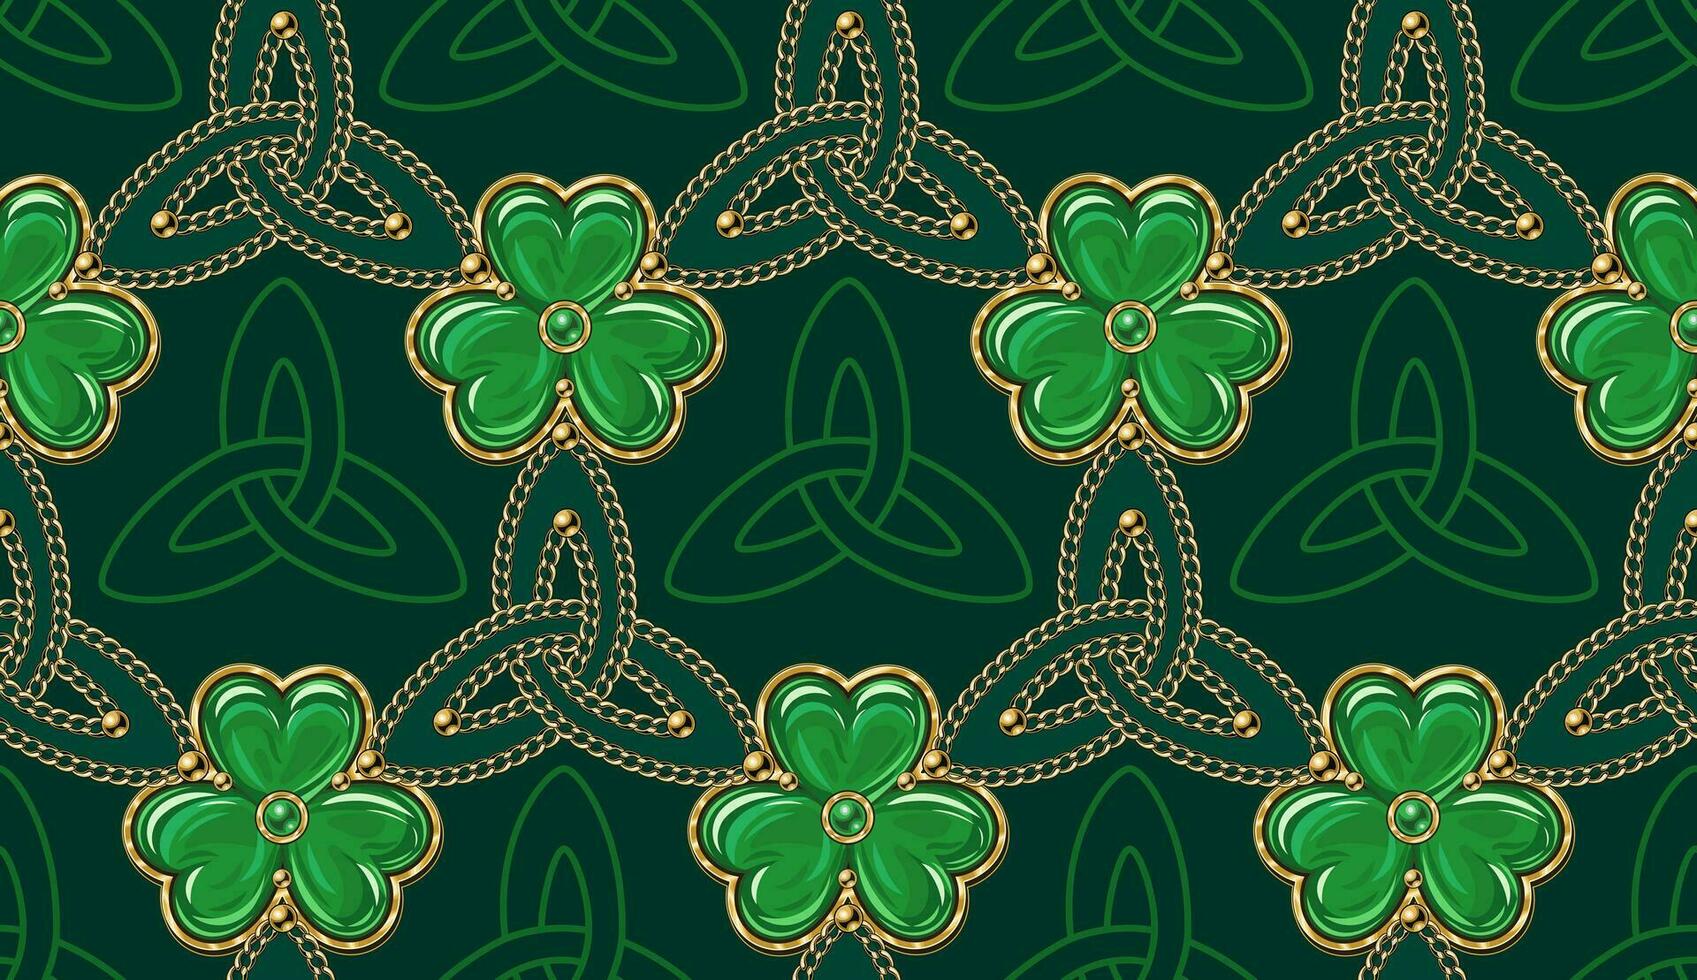 Geometric St Patricks day pattern with celtic triskele sign, gold chains, clover, shamrock like jewelry charm made of green enamel in golden frame. Vintage illustration on dark green background vector